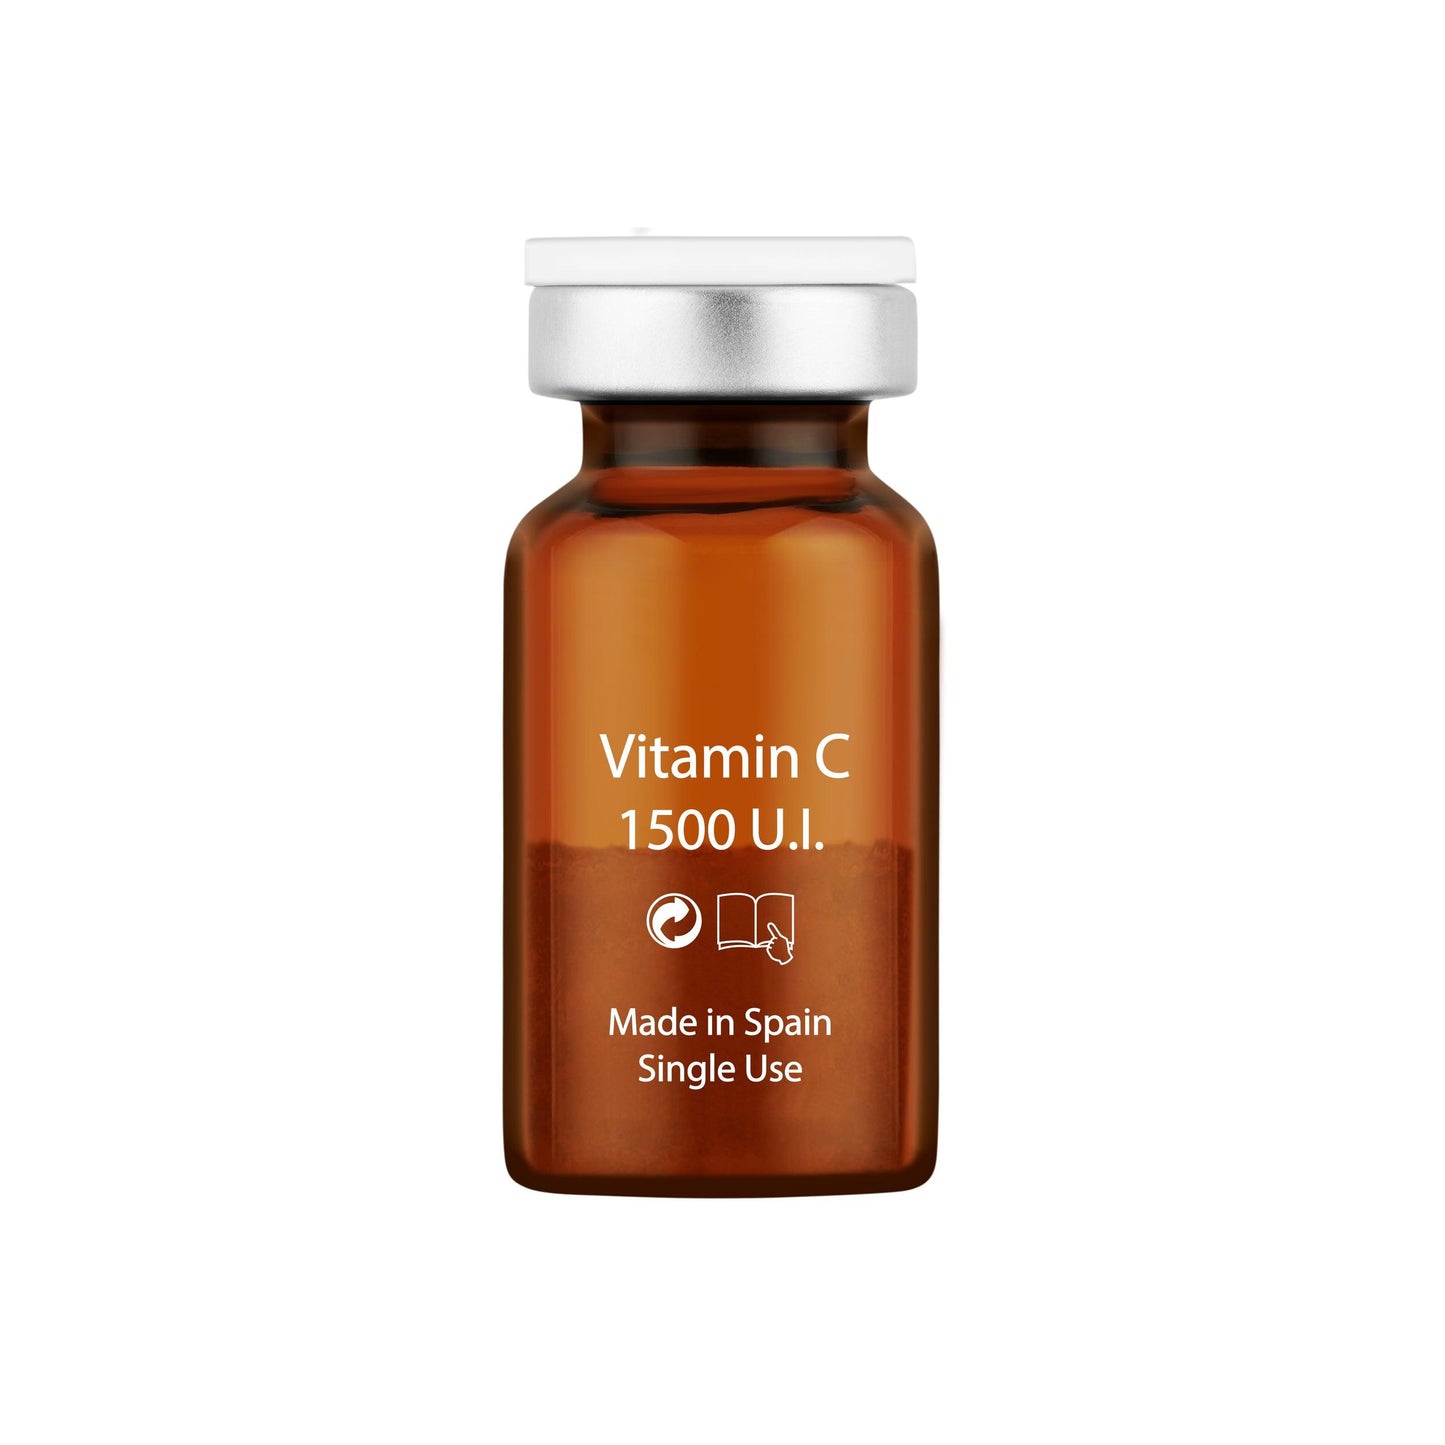 Vitamin C 1500 U.I. Vial - MCCM Medical Cosmetics